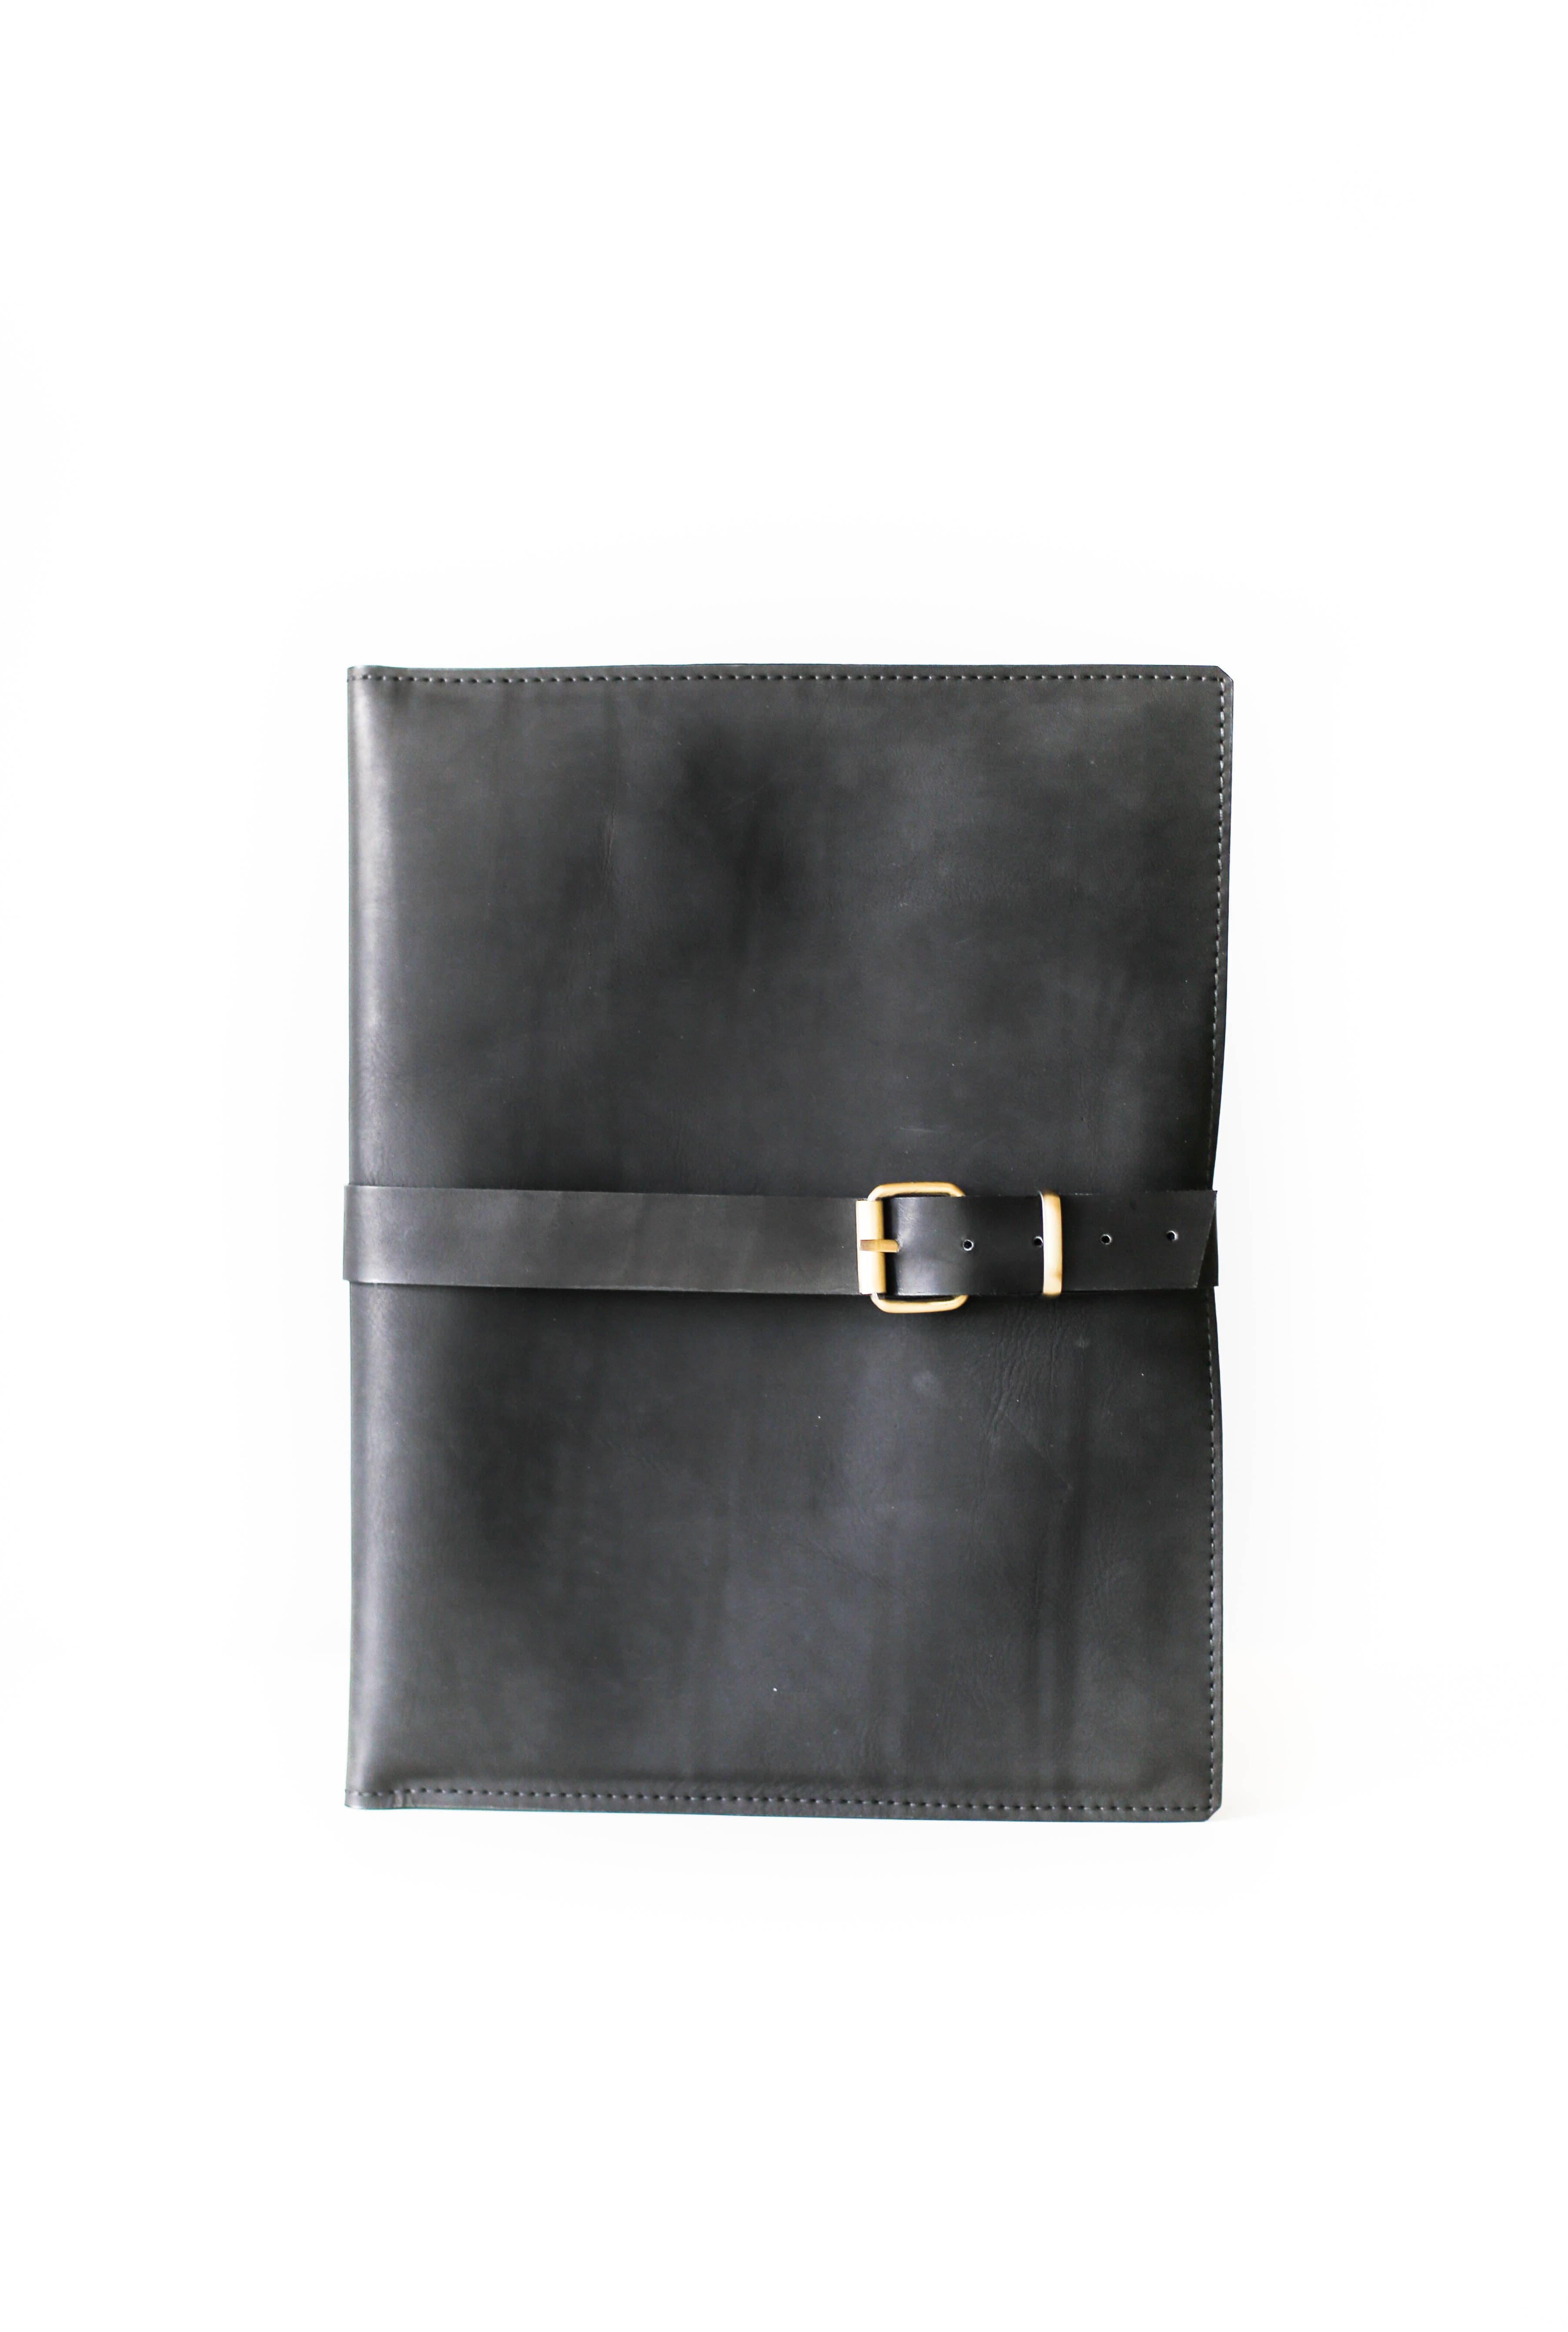 Kaku Premium leather Flip Cover for Apple iPad 2/3/4/5/6/7/8/9/pro 9.7